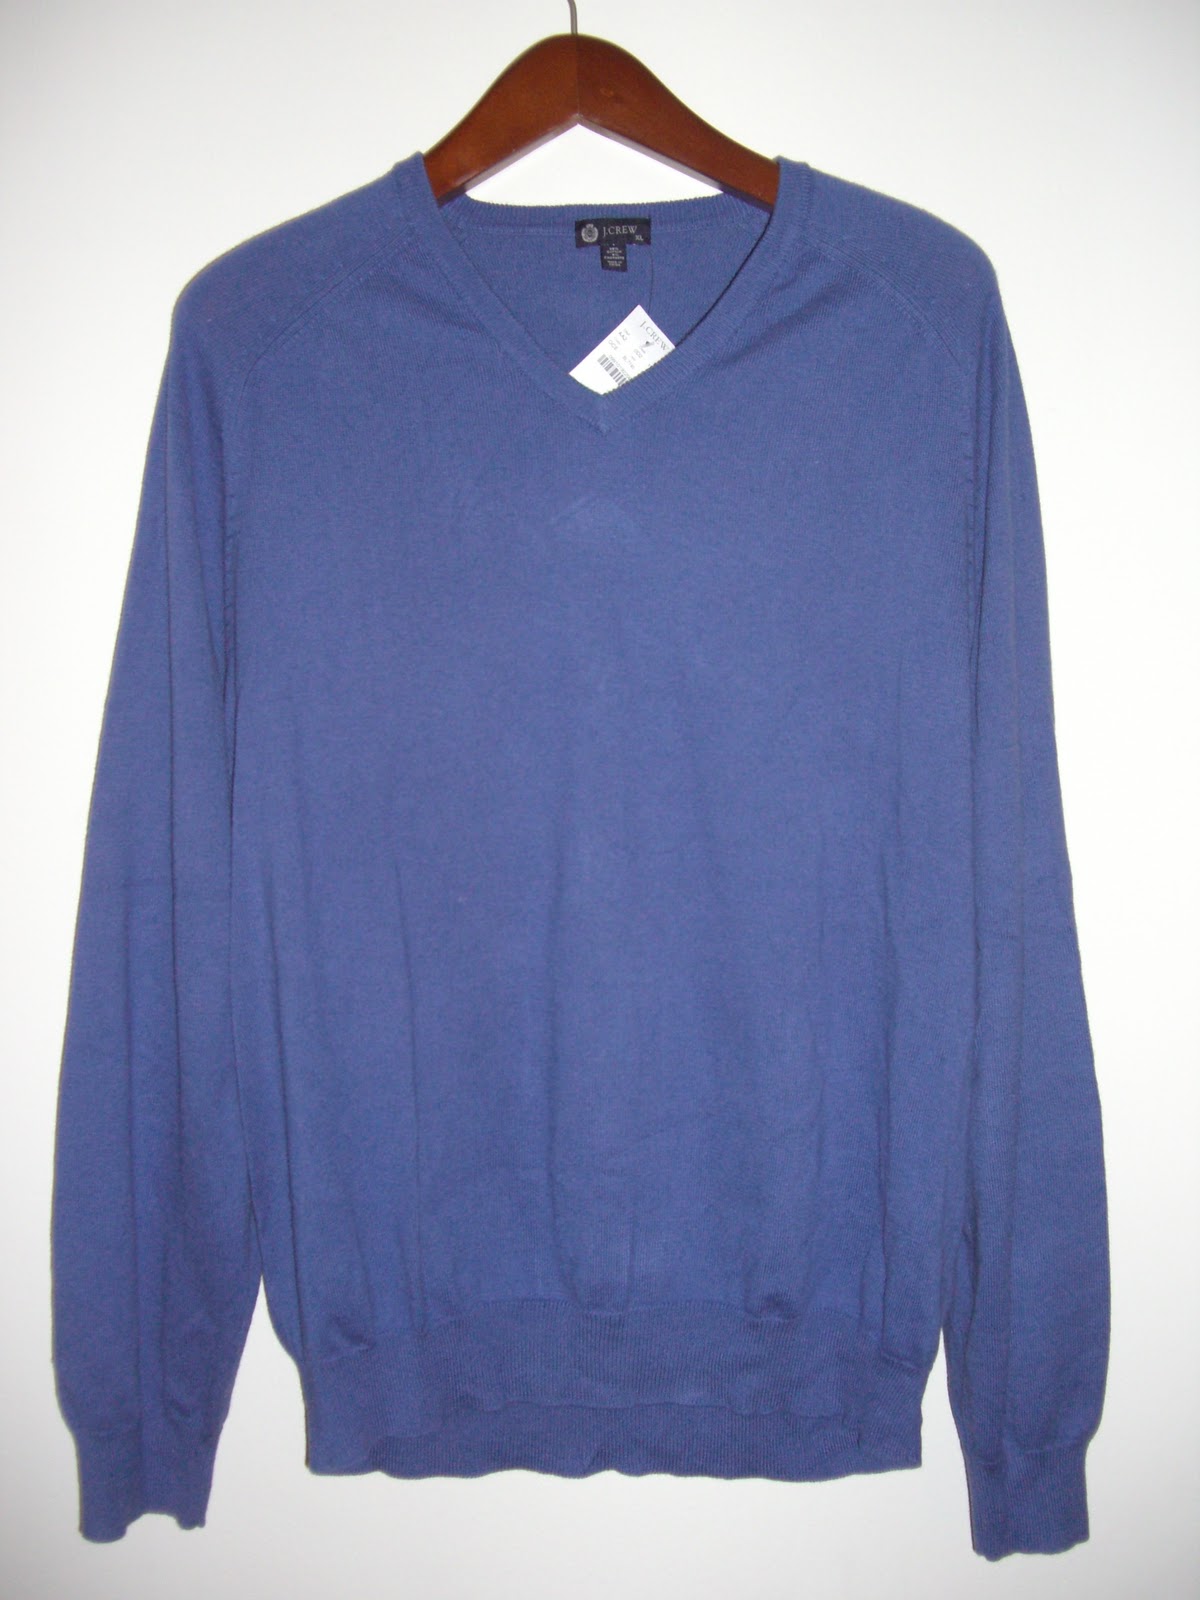 justtestingthis33: NWT J. Crew Blue Sweater